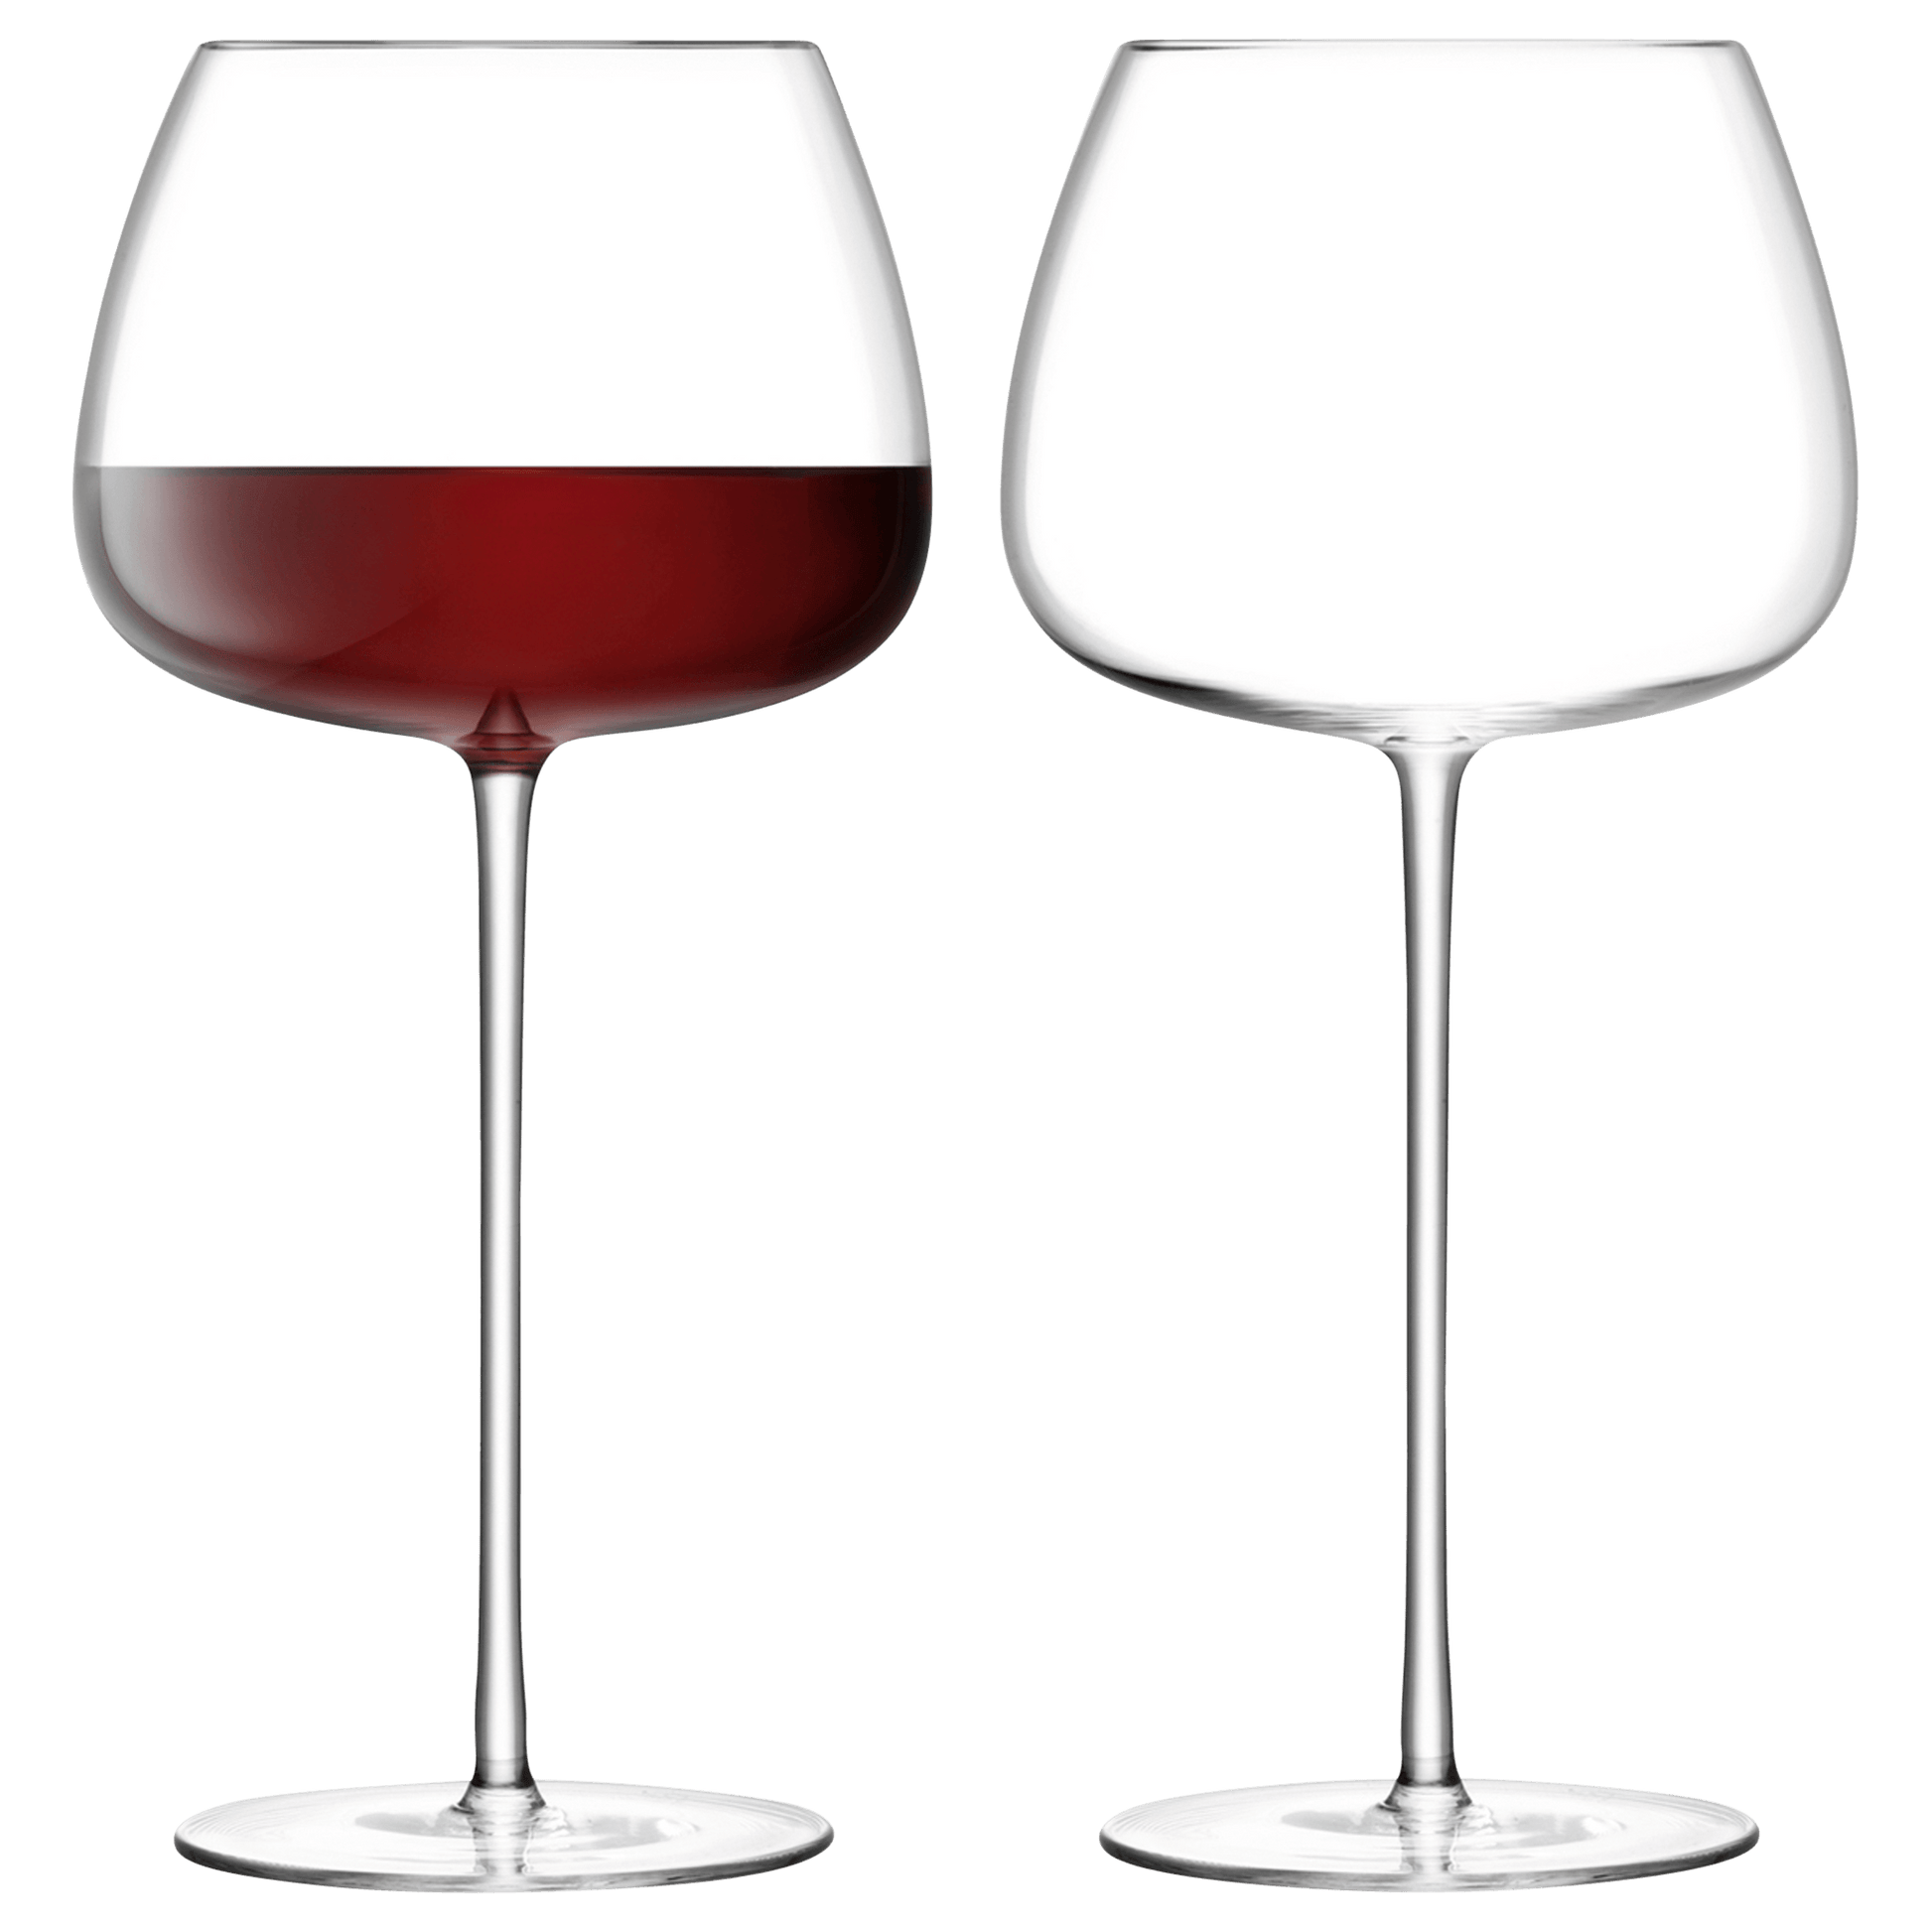 KOSIUN, Red Wine Glass, Large Balloon Bowl, Lead-Free